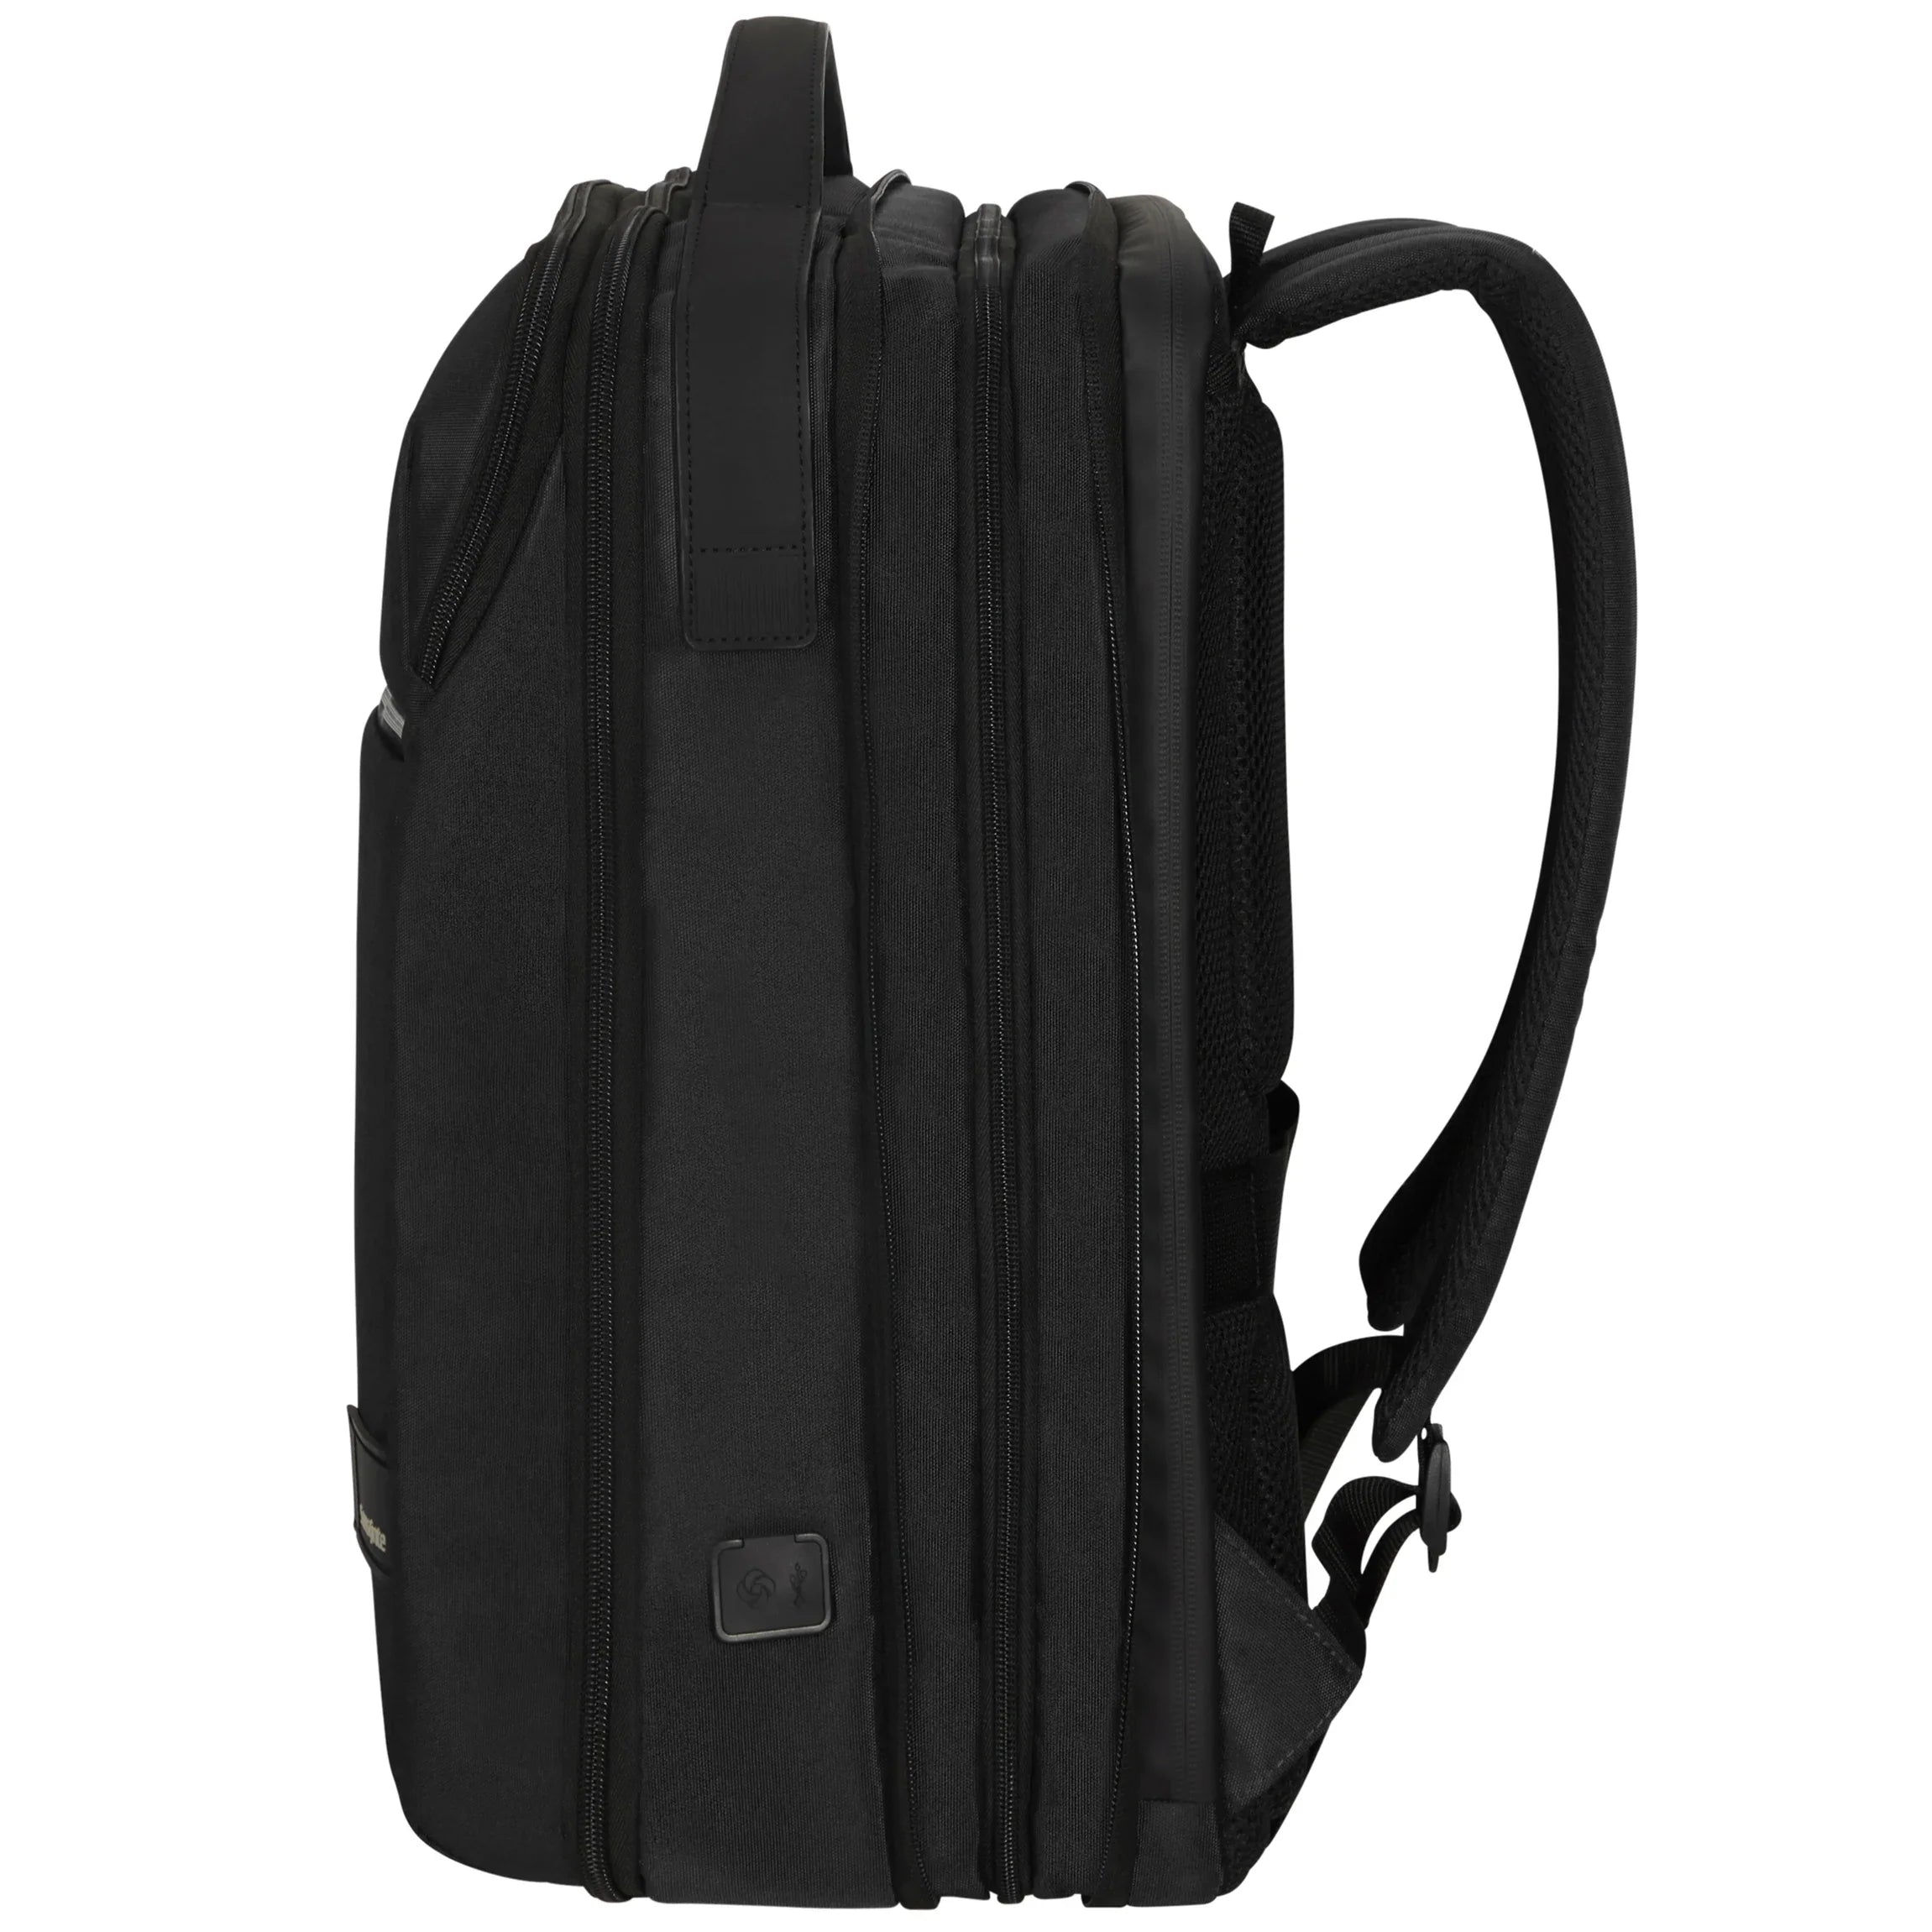 Samsonite Litepoint Laptop Backpack 46 cm - Black